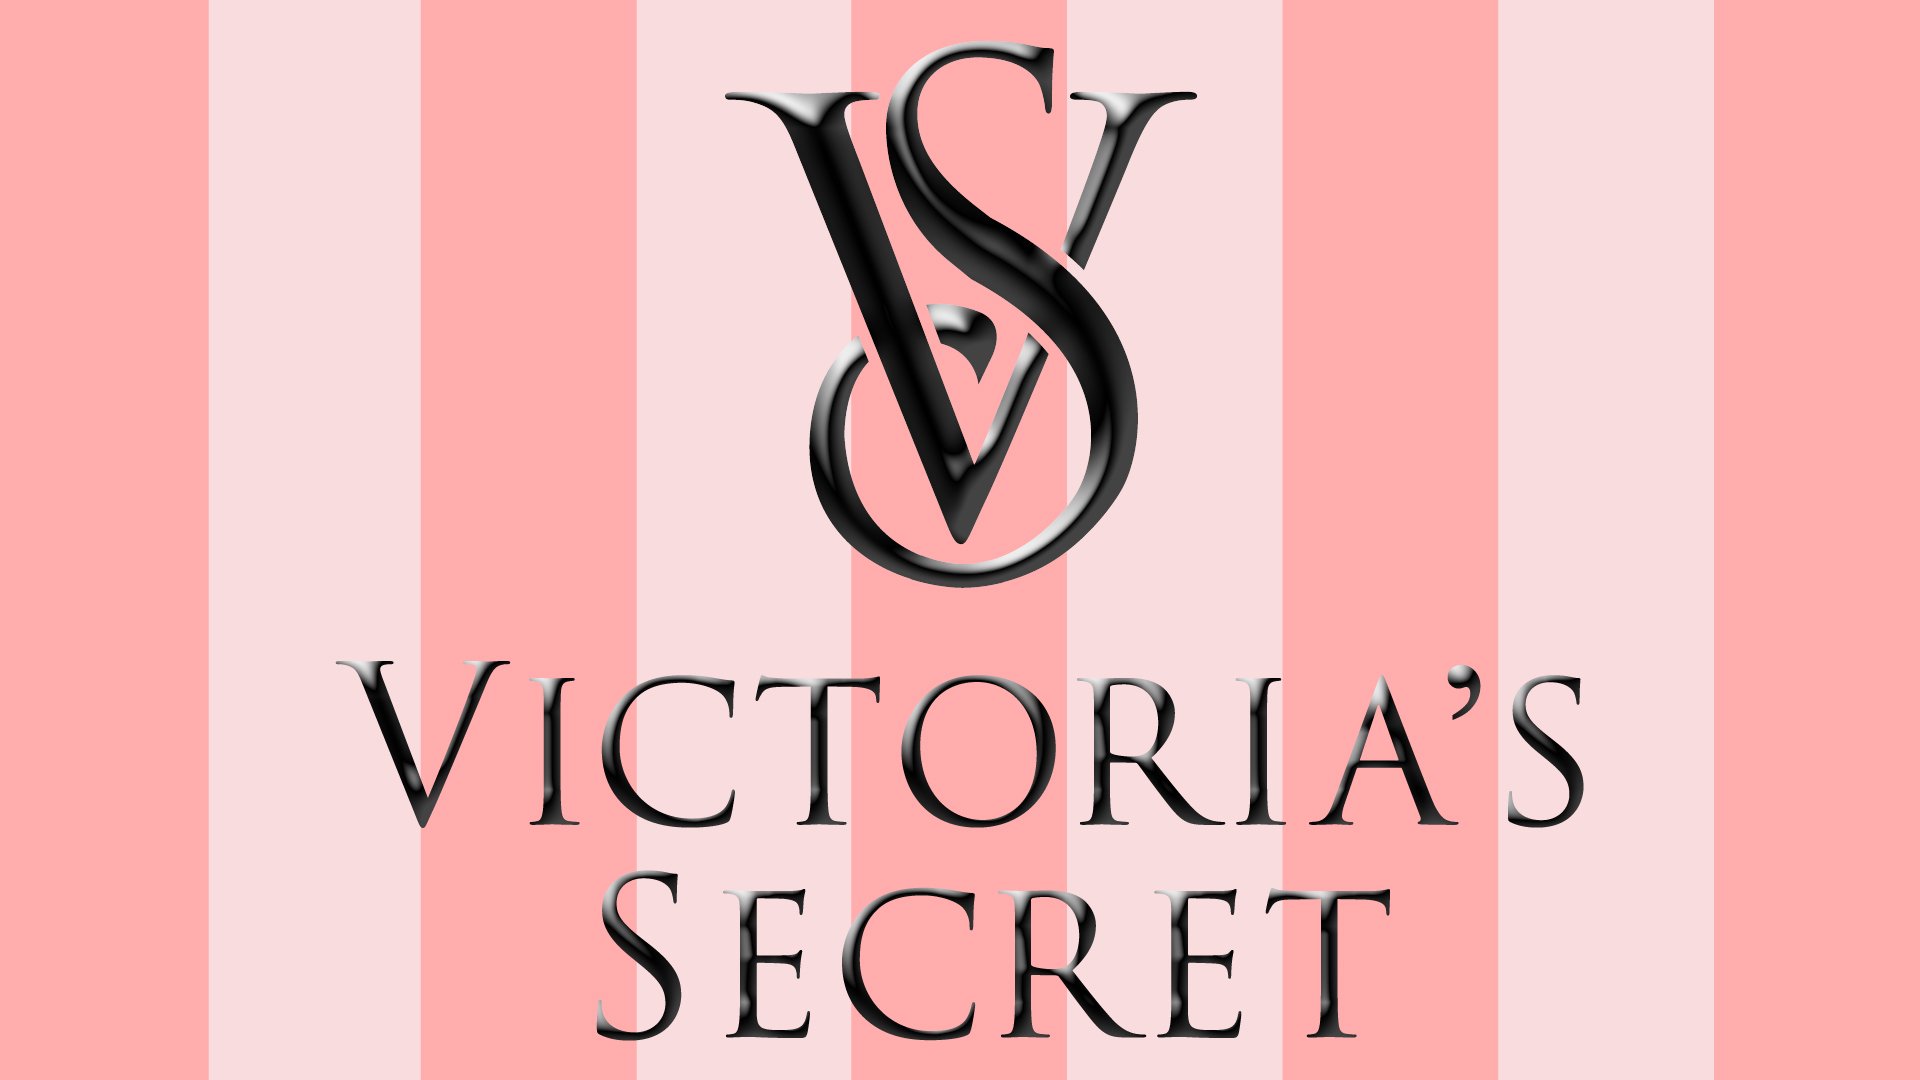 34 Victoria's Secret Label History Label Design Ideas 2020